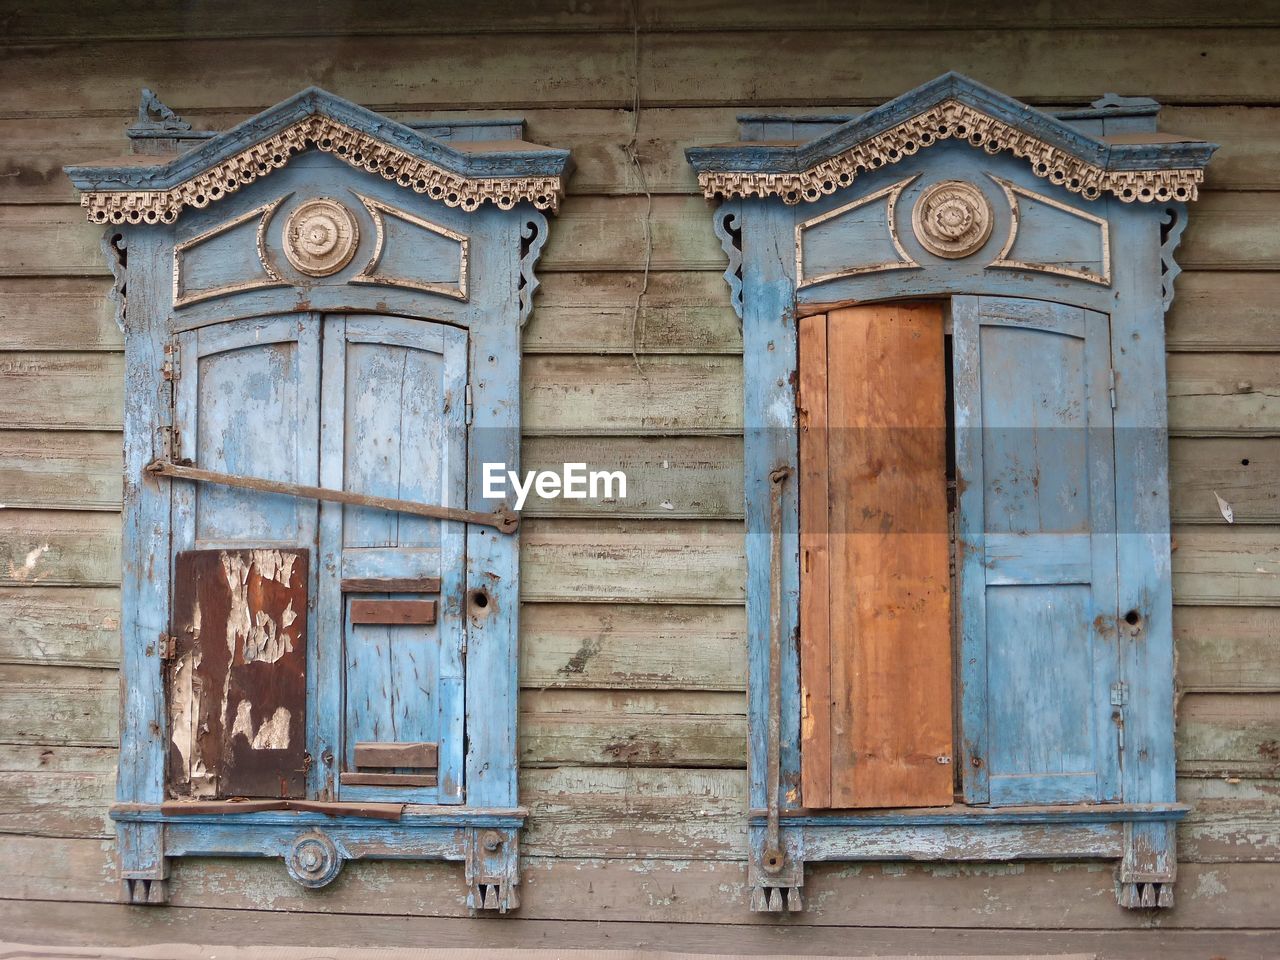 Closed window shutters on an old, weathered wooden house in irkutsk, russia